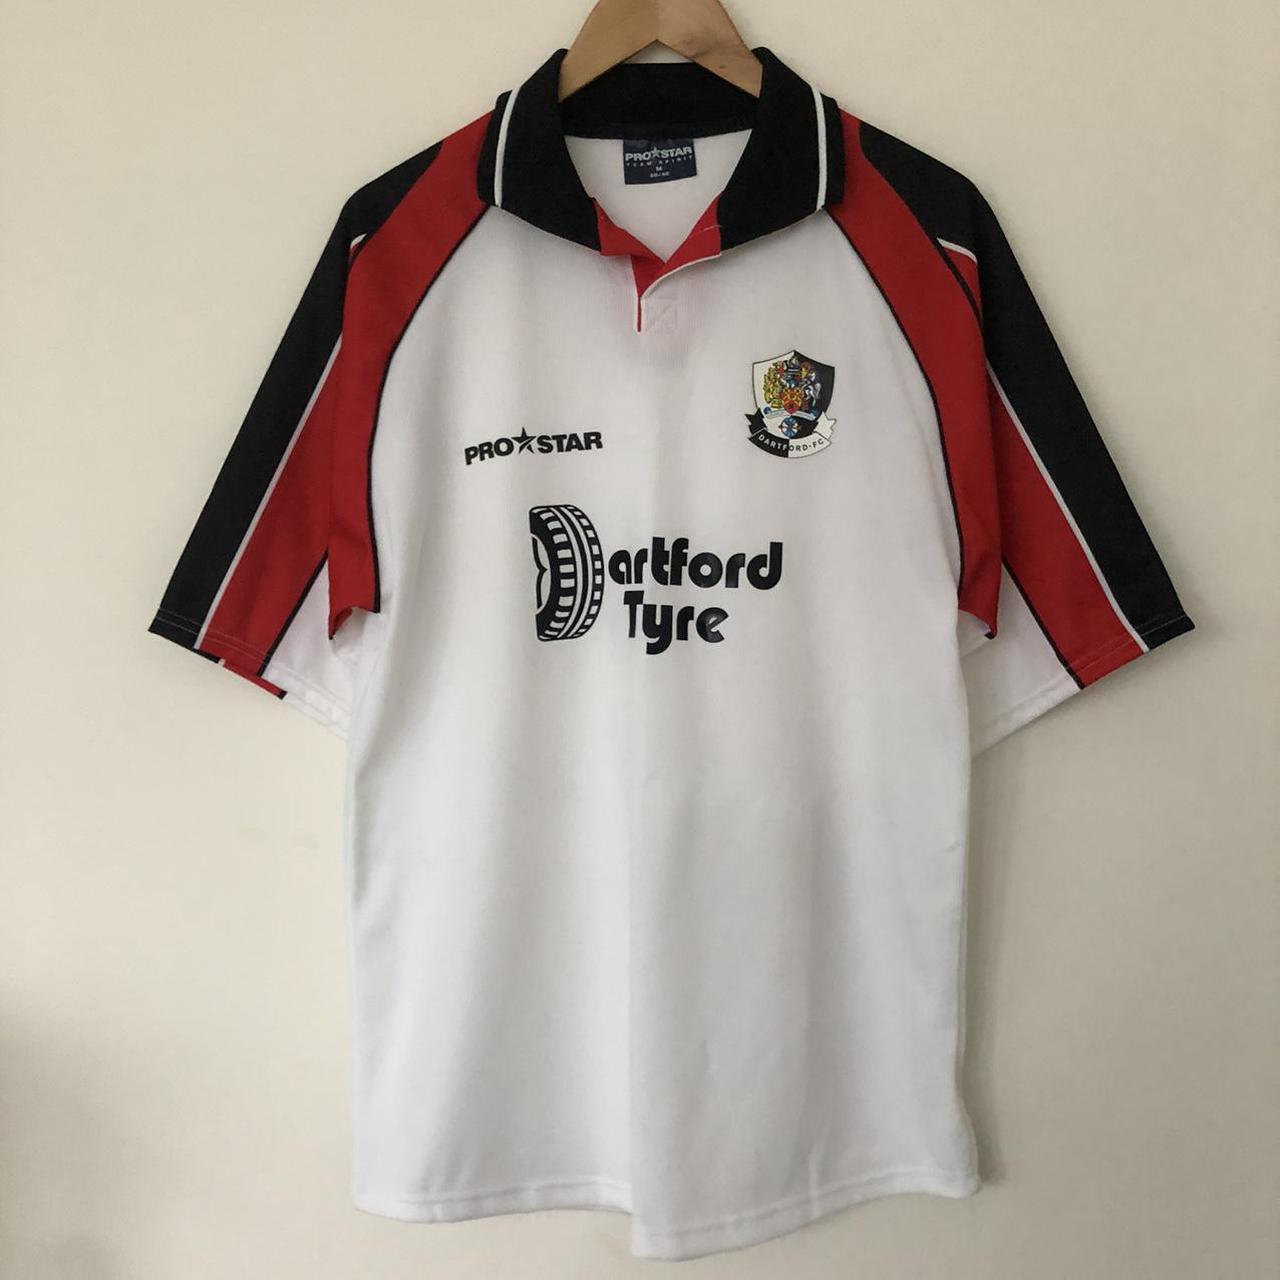 Vintage 2003/05 Dartford FC Football Shirt Size... - Depop